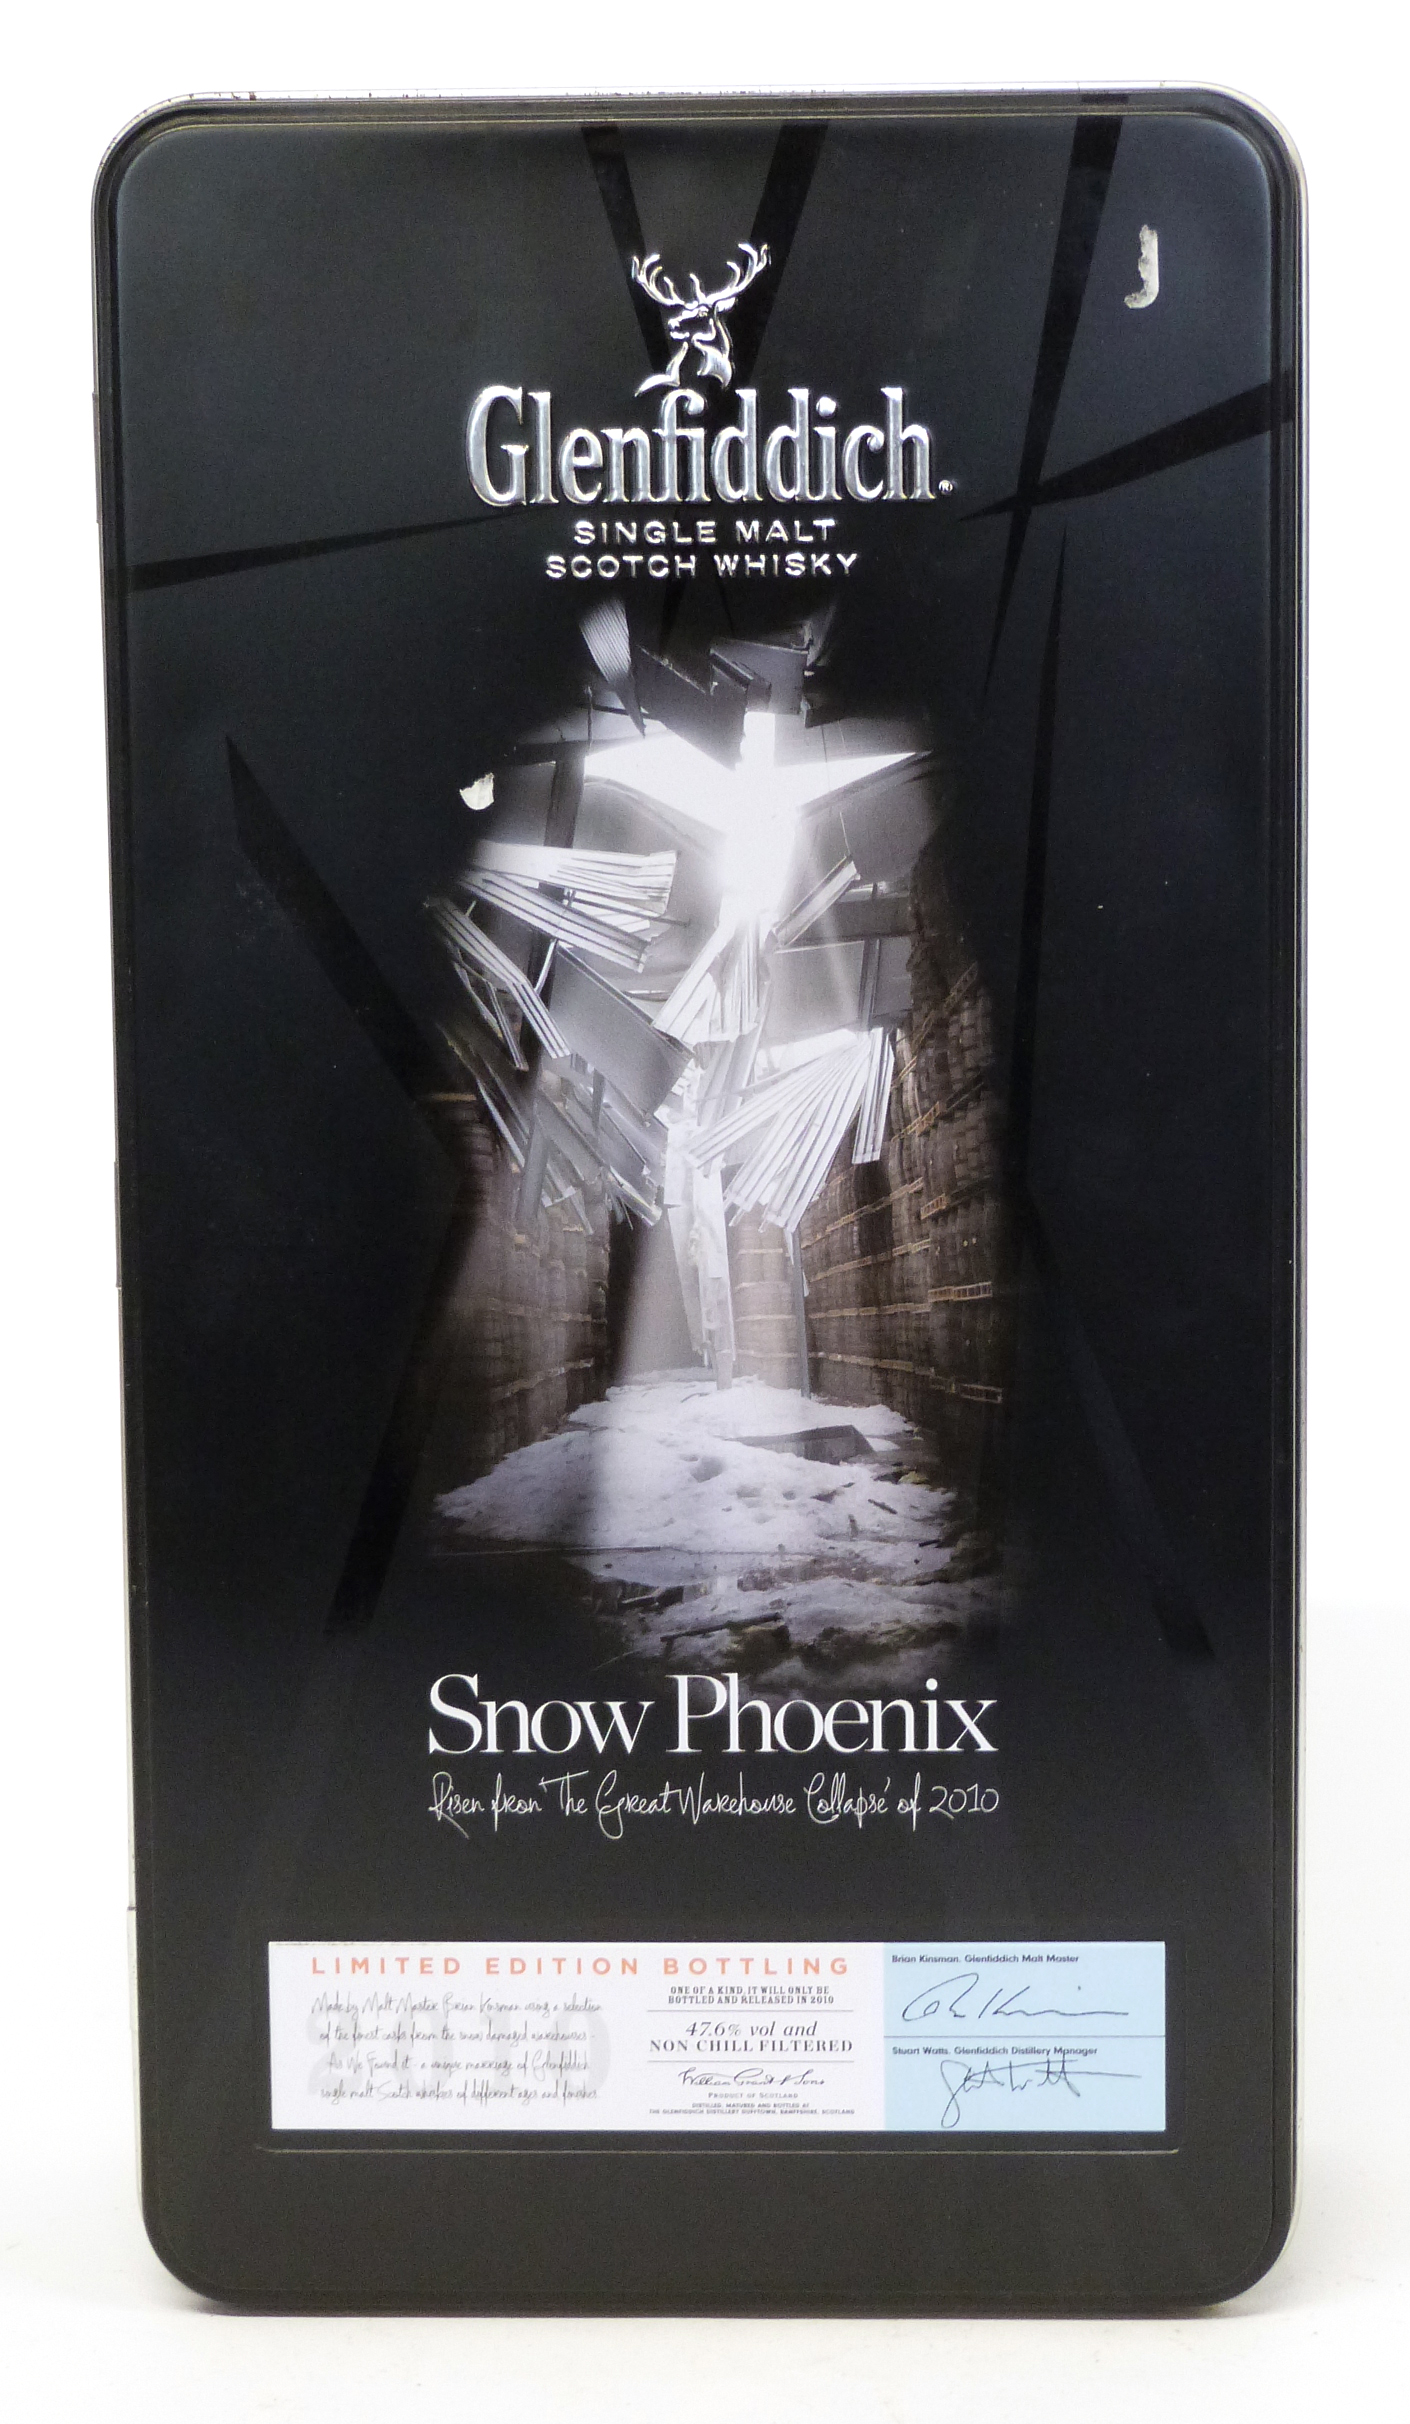 Glenfiddich Snow Phoenix Single Malt Scotch Whisky^ 2010^ limited edition bottling^ 70cl^ 47.6% - Image 4 of 4